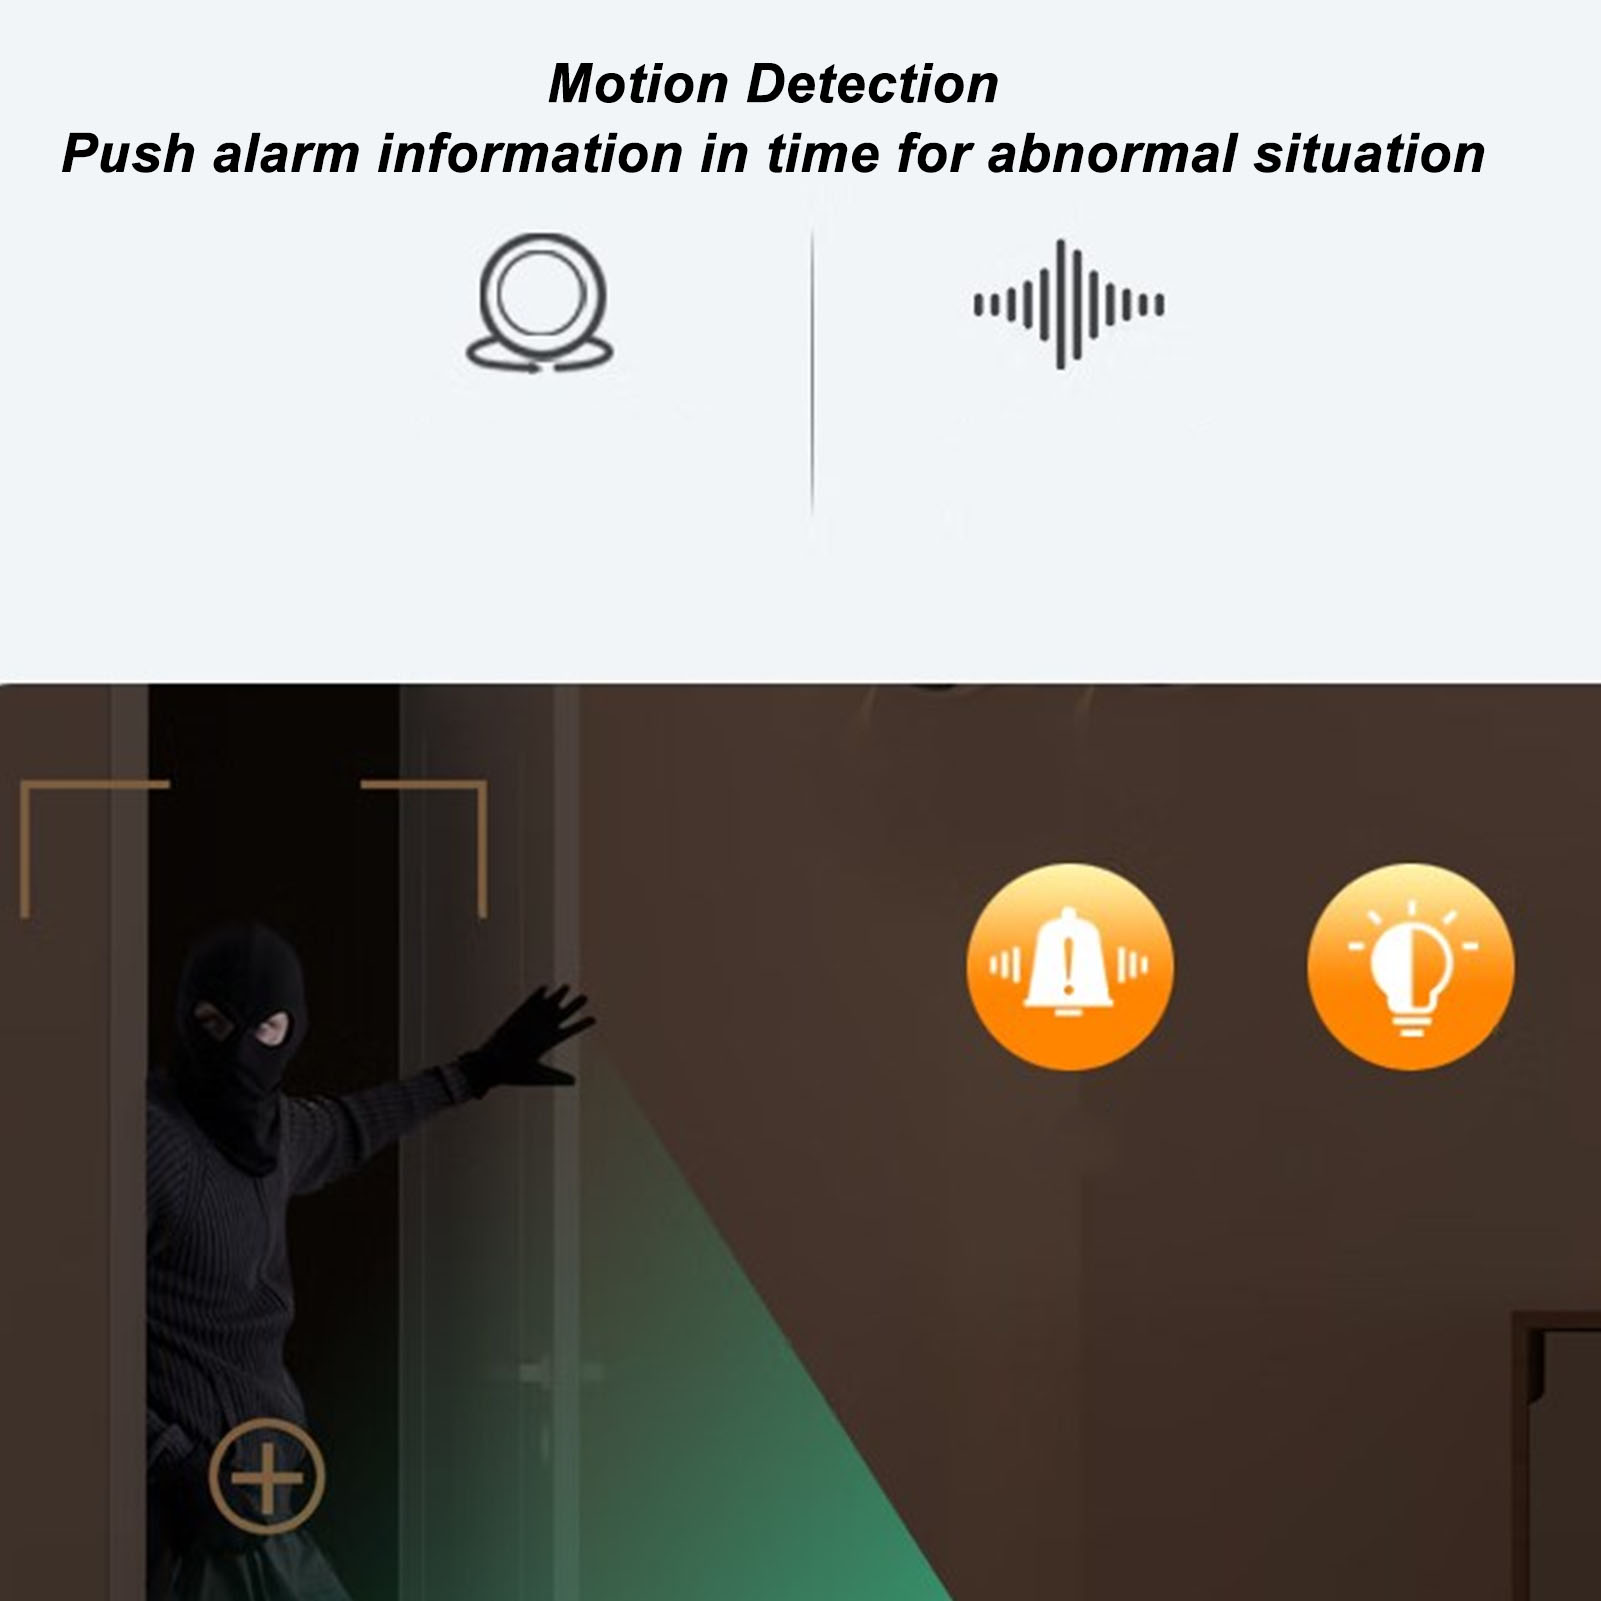 Indoor Security Camera Motion Detection Night APP Viewing WiFi Pan UK